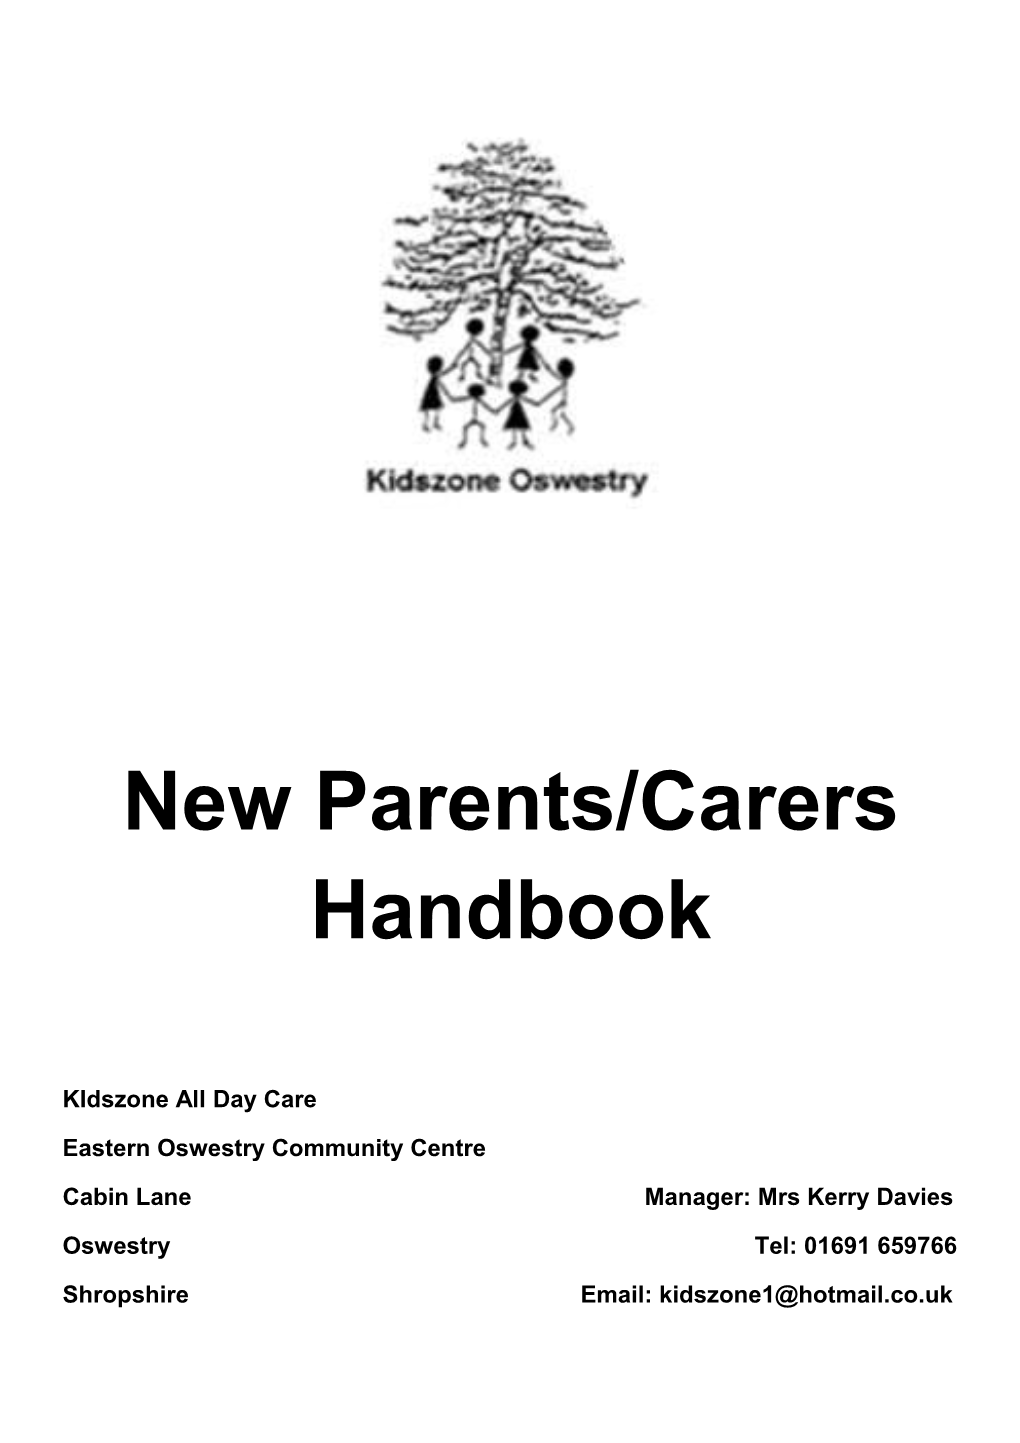 New Parents/Carers Handbook